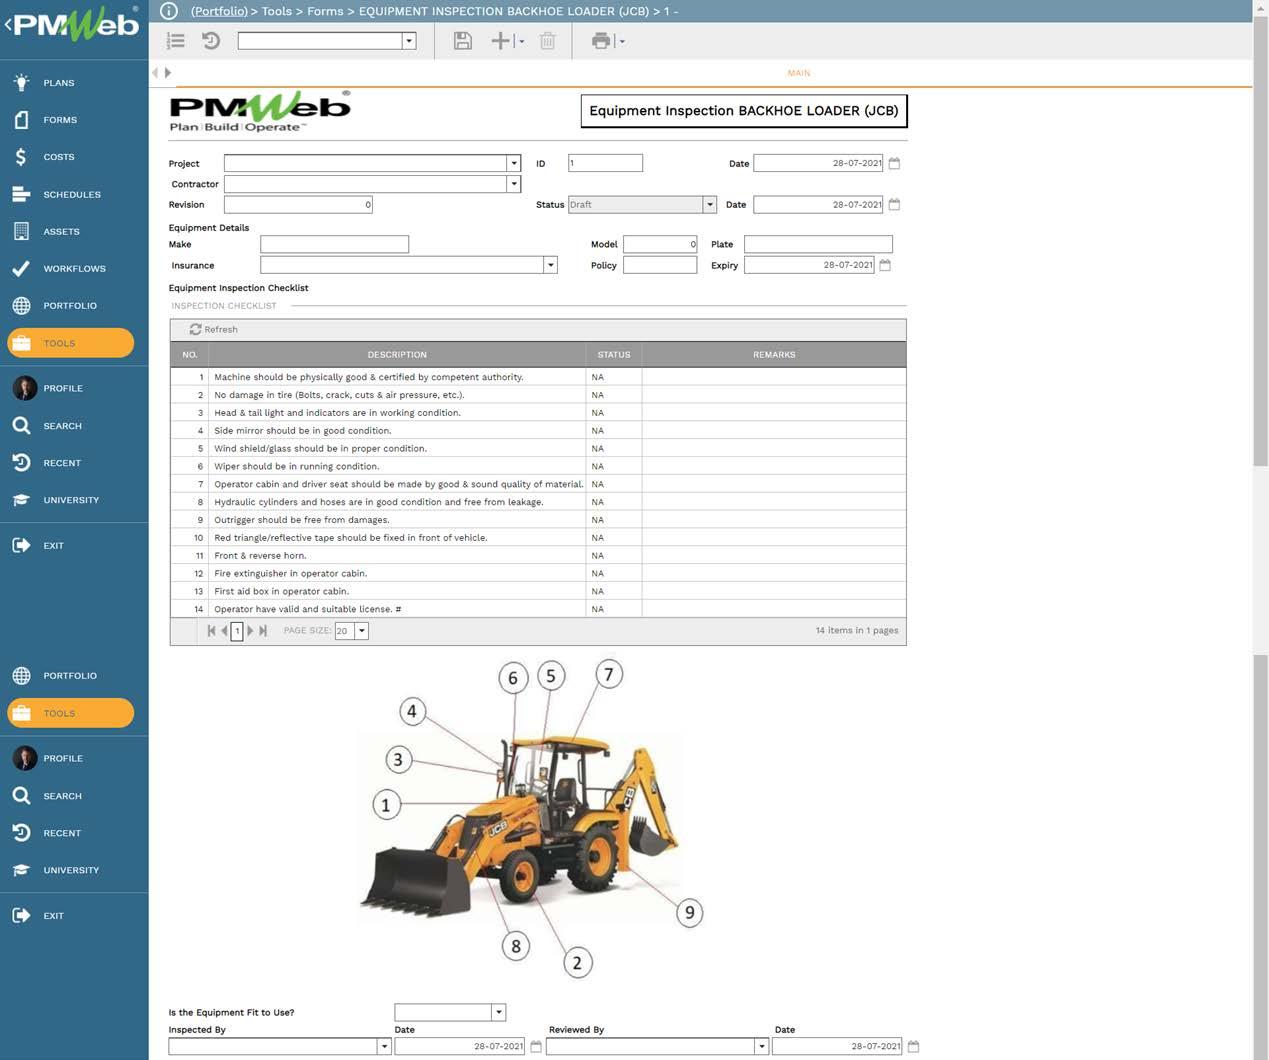 PMWeb 7 Tools Forms Equipment Inspection Backhoe Loader 
Main